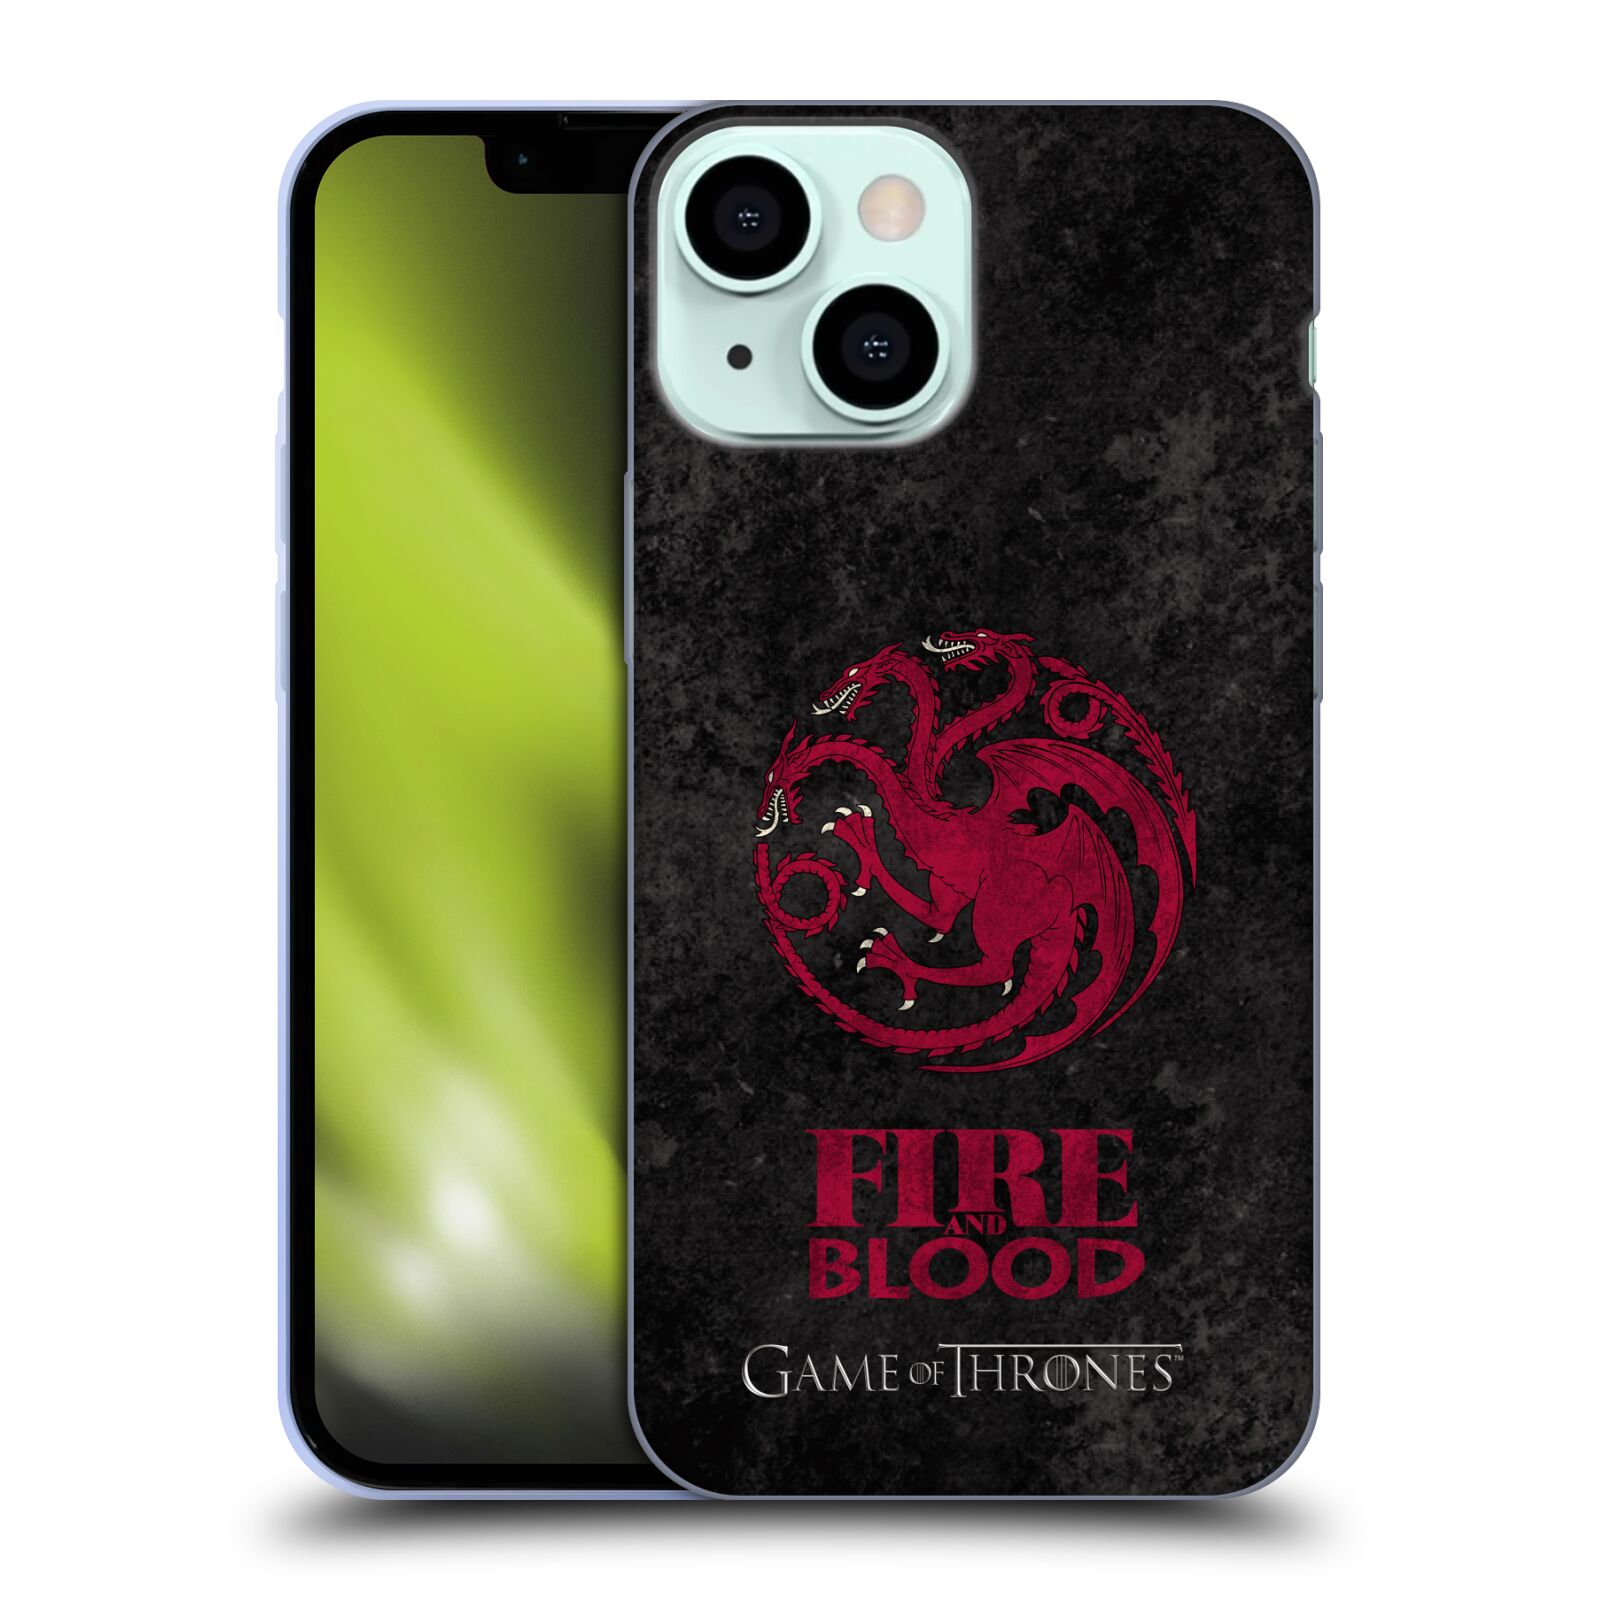 Silikonové pouzdro na mobil Apple iPhone 13 Mini - Head Case - Hra o trůny - Sigils Targaryen - Fire and Blood (Silikonový kryt, obal, pouzdro na mobilní telefon Apple iPhone 13 Mini s motivem Hra o trůny - Sigils Targaryen - Fire and Blood)